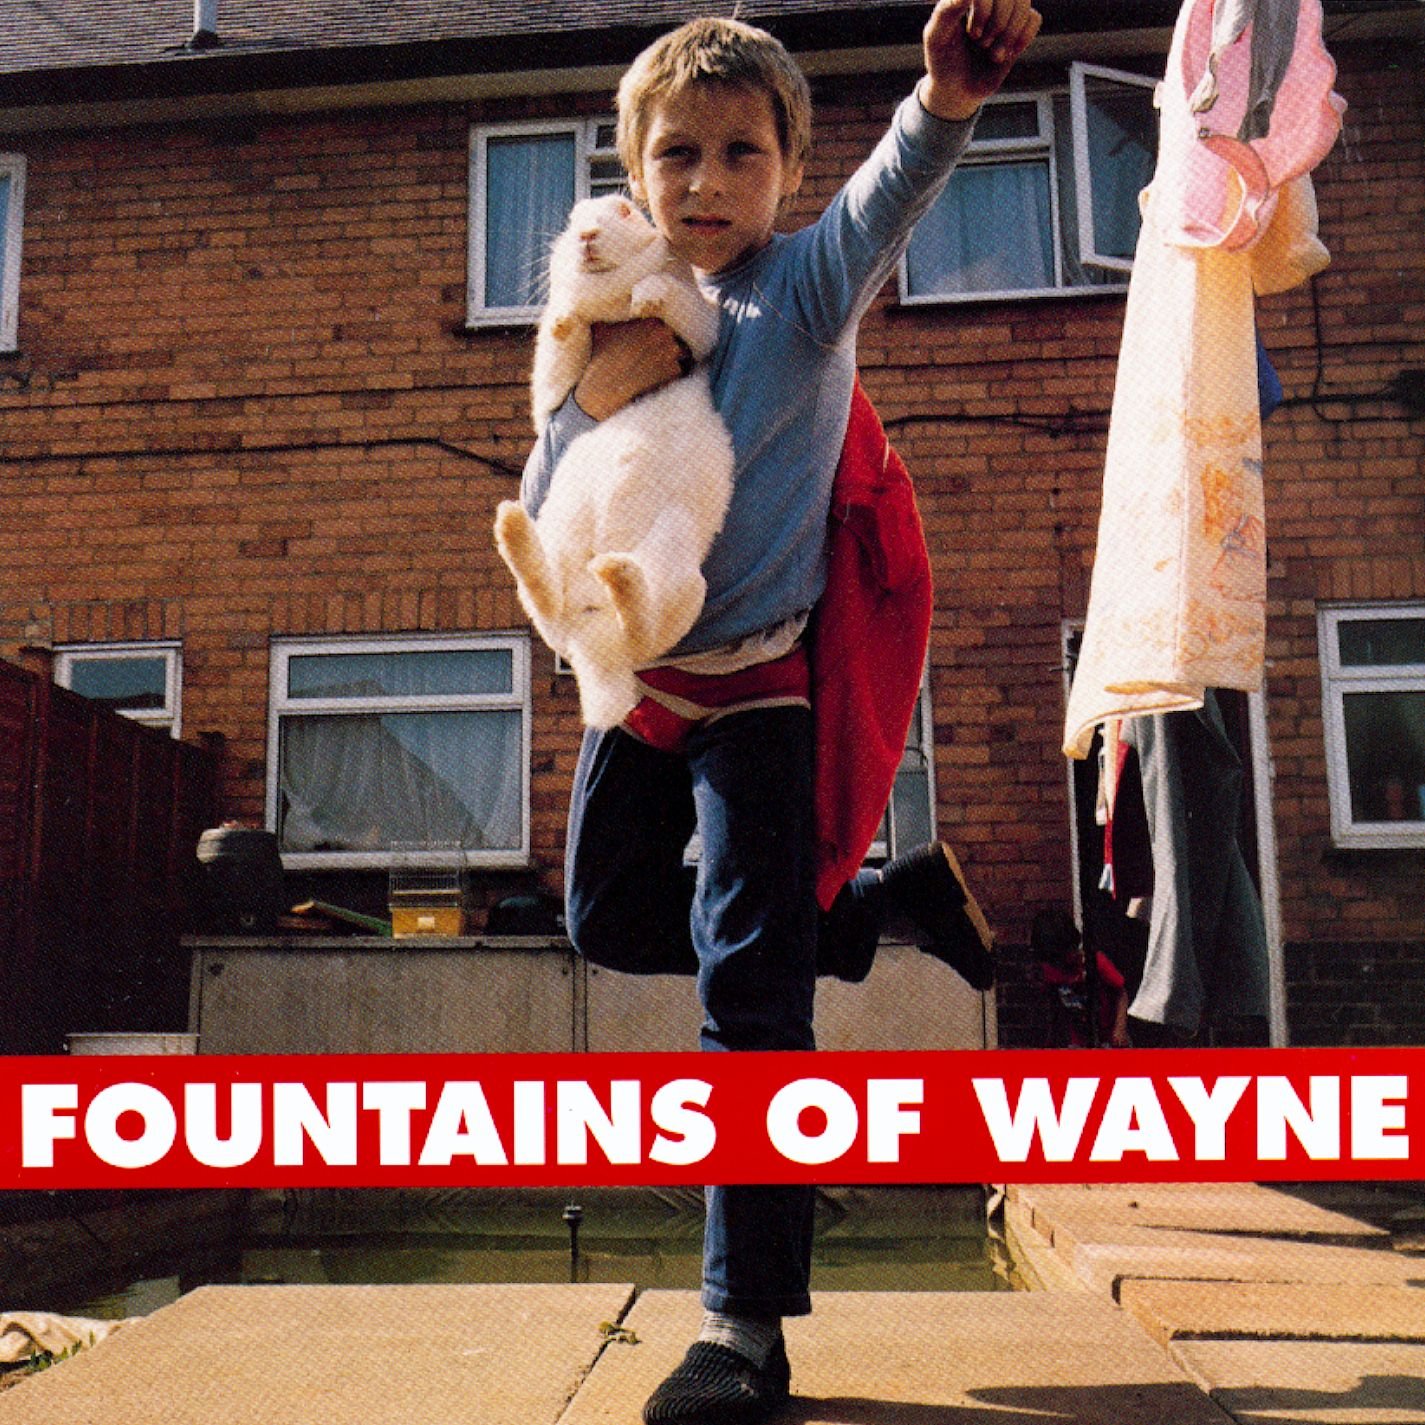 Fountains of Wayne "Fountains of Wayne" LP